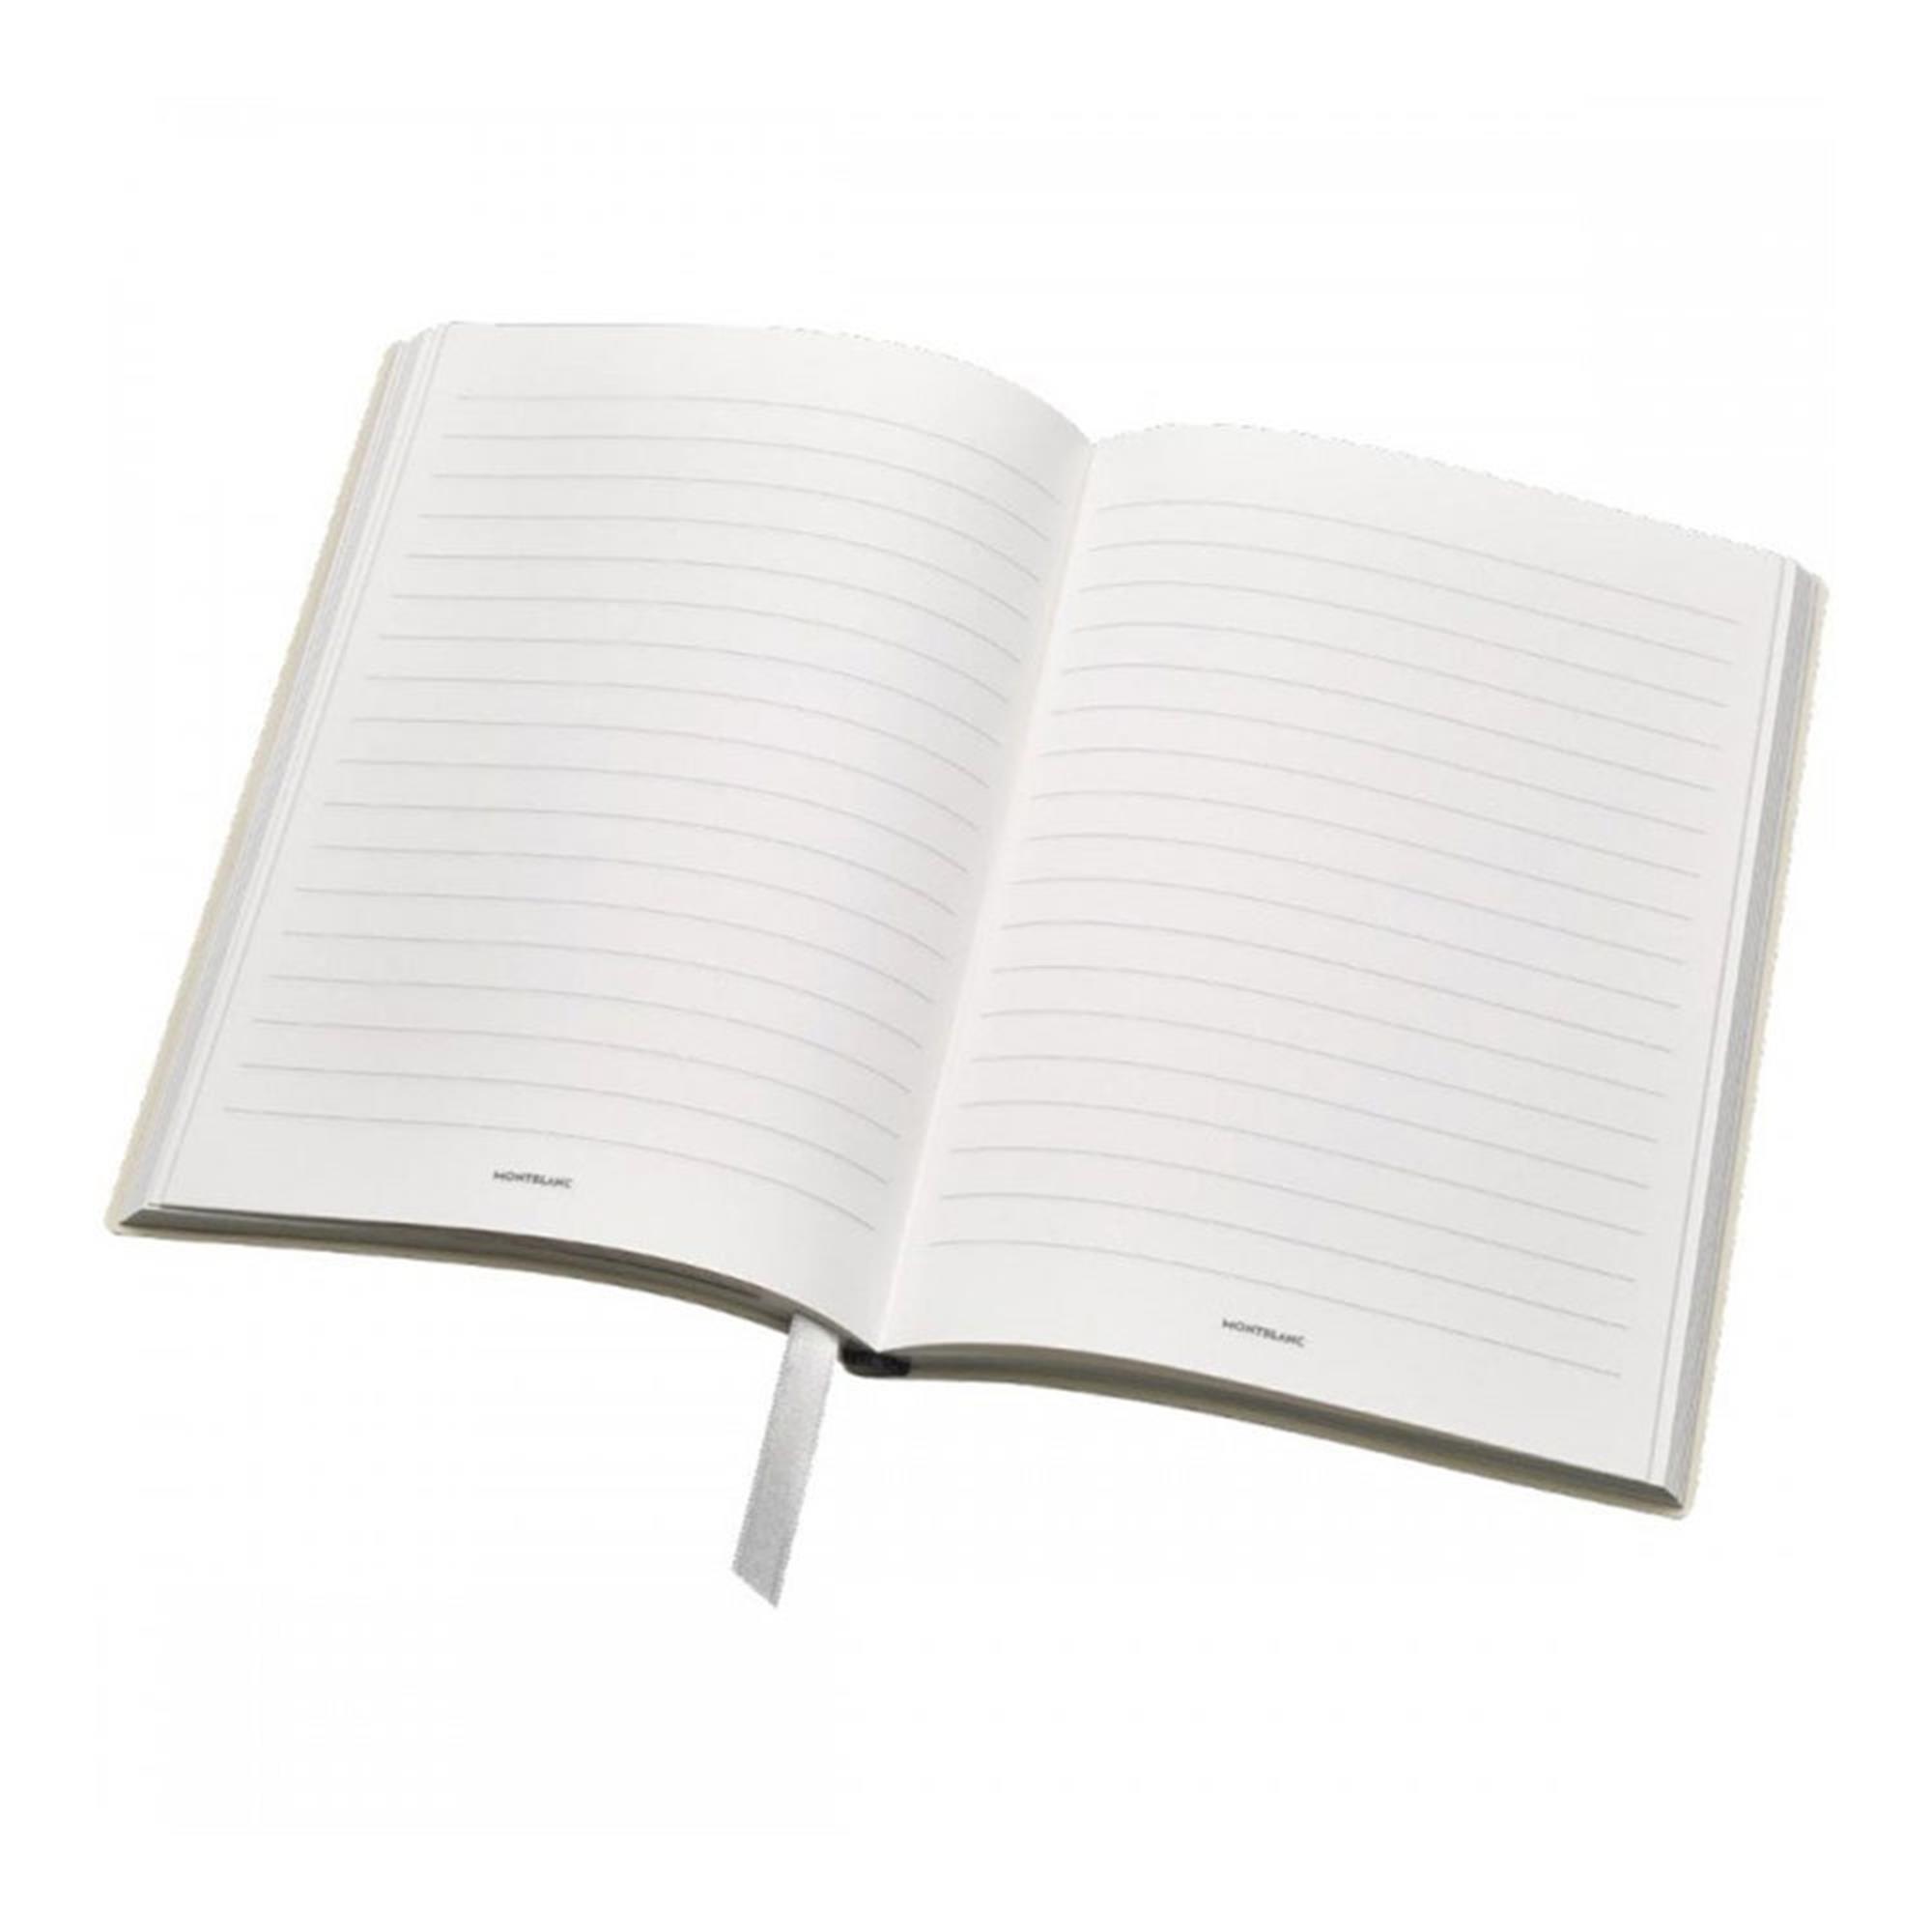 Montblanc 146 Pearl White Notebook Pravins